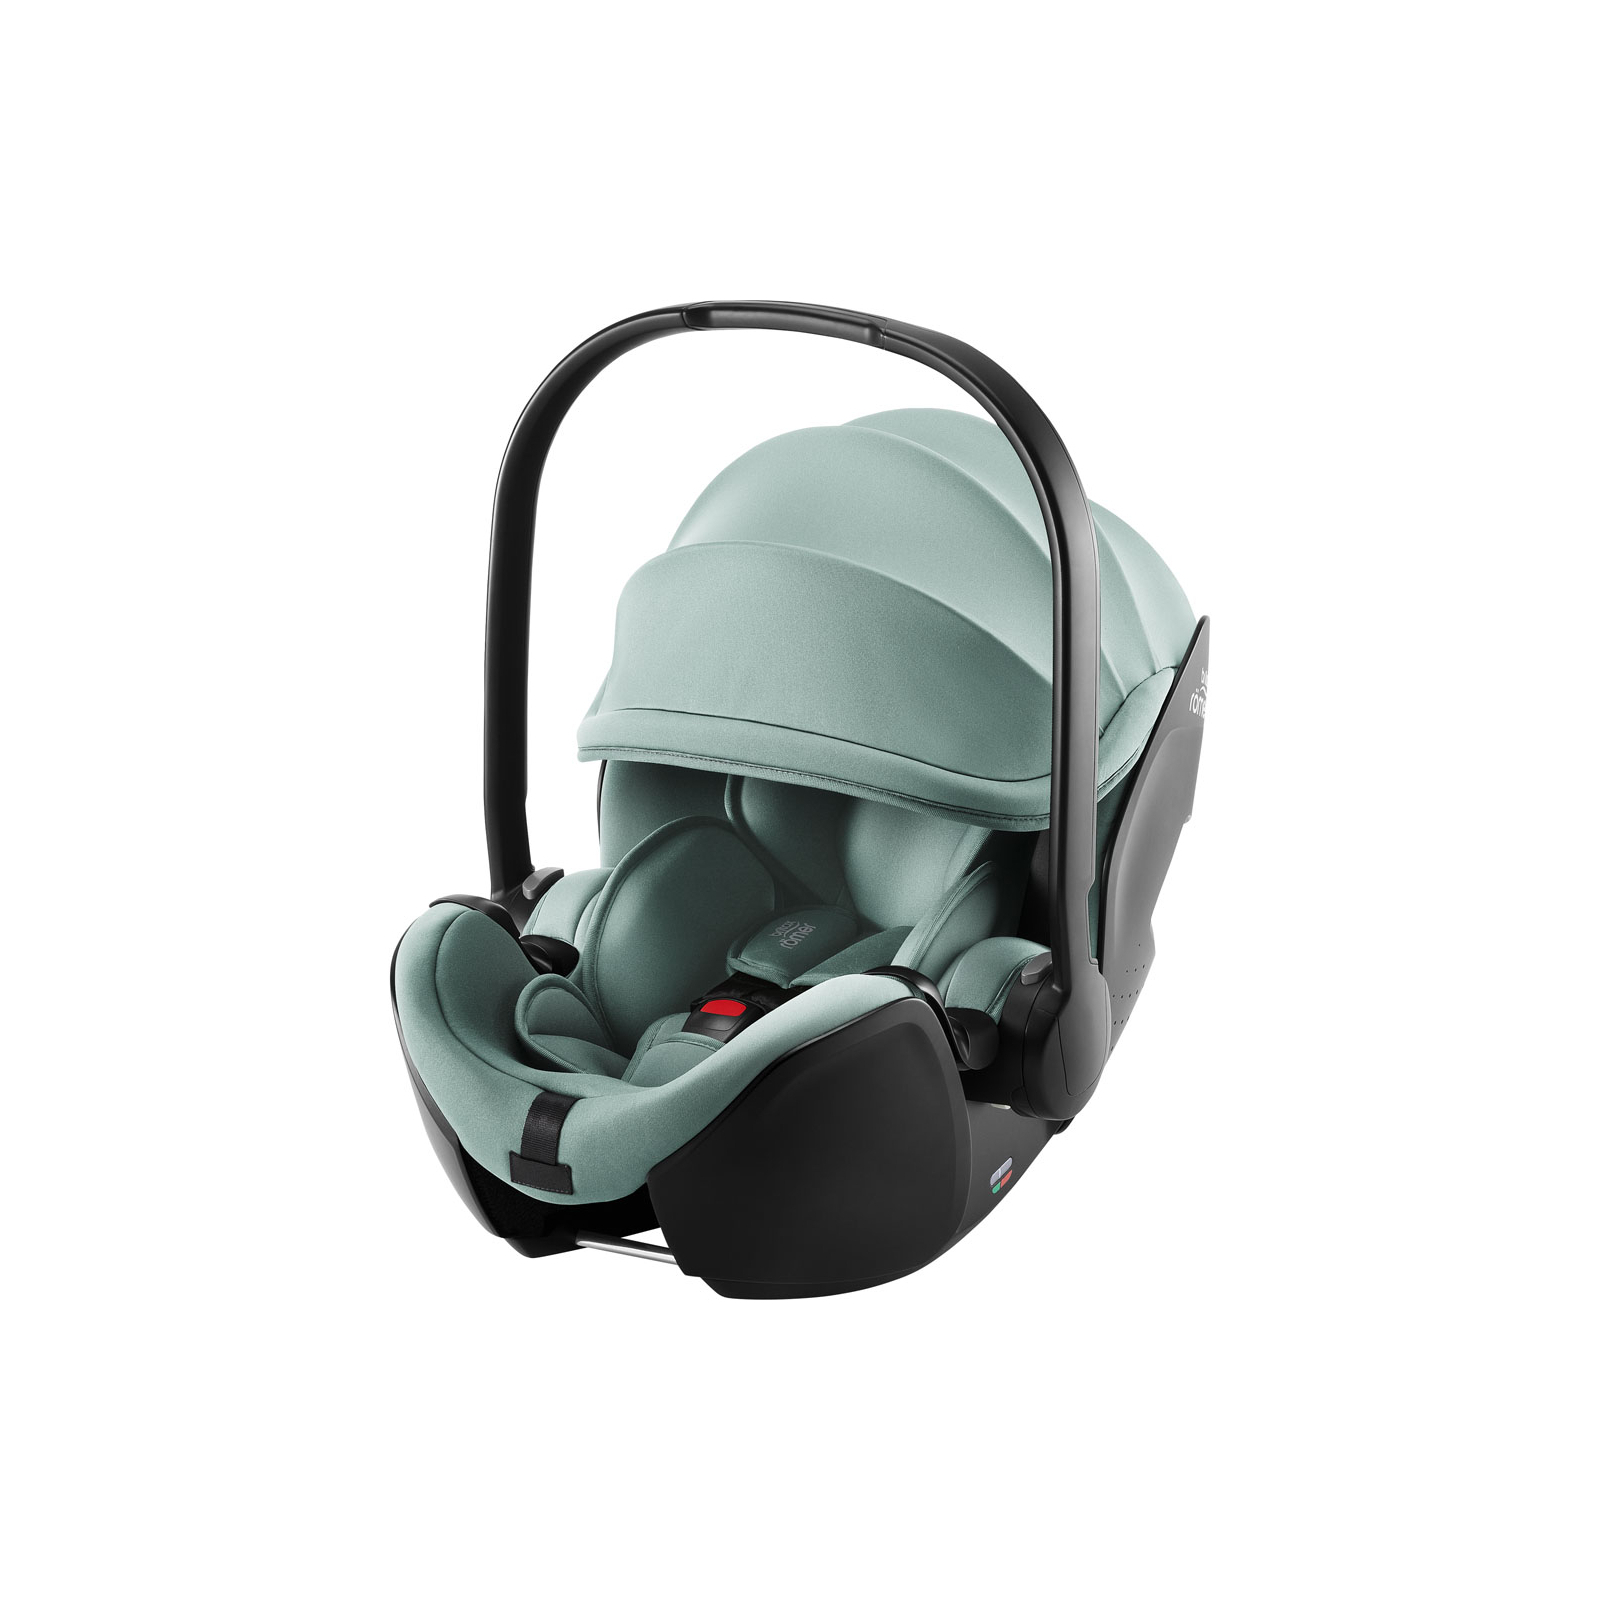 Автокрісло Britax-Romer Baby-Safe Pro Soft Taupe (2000039636)